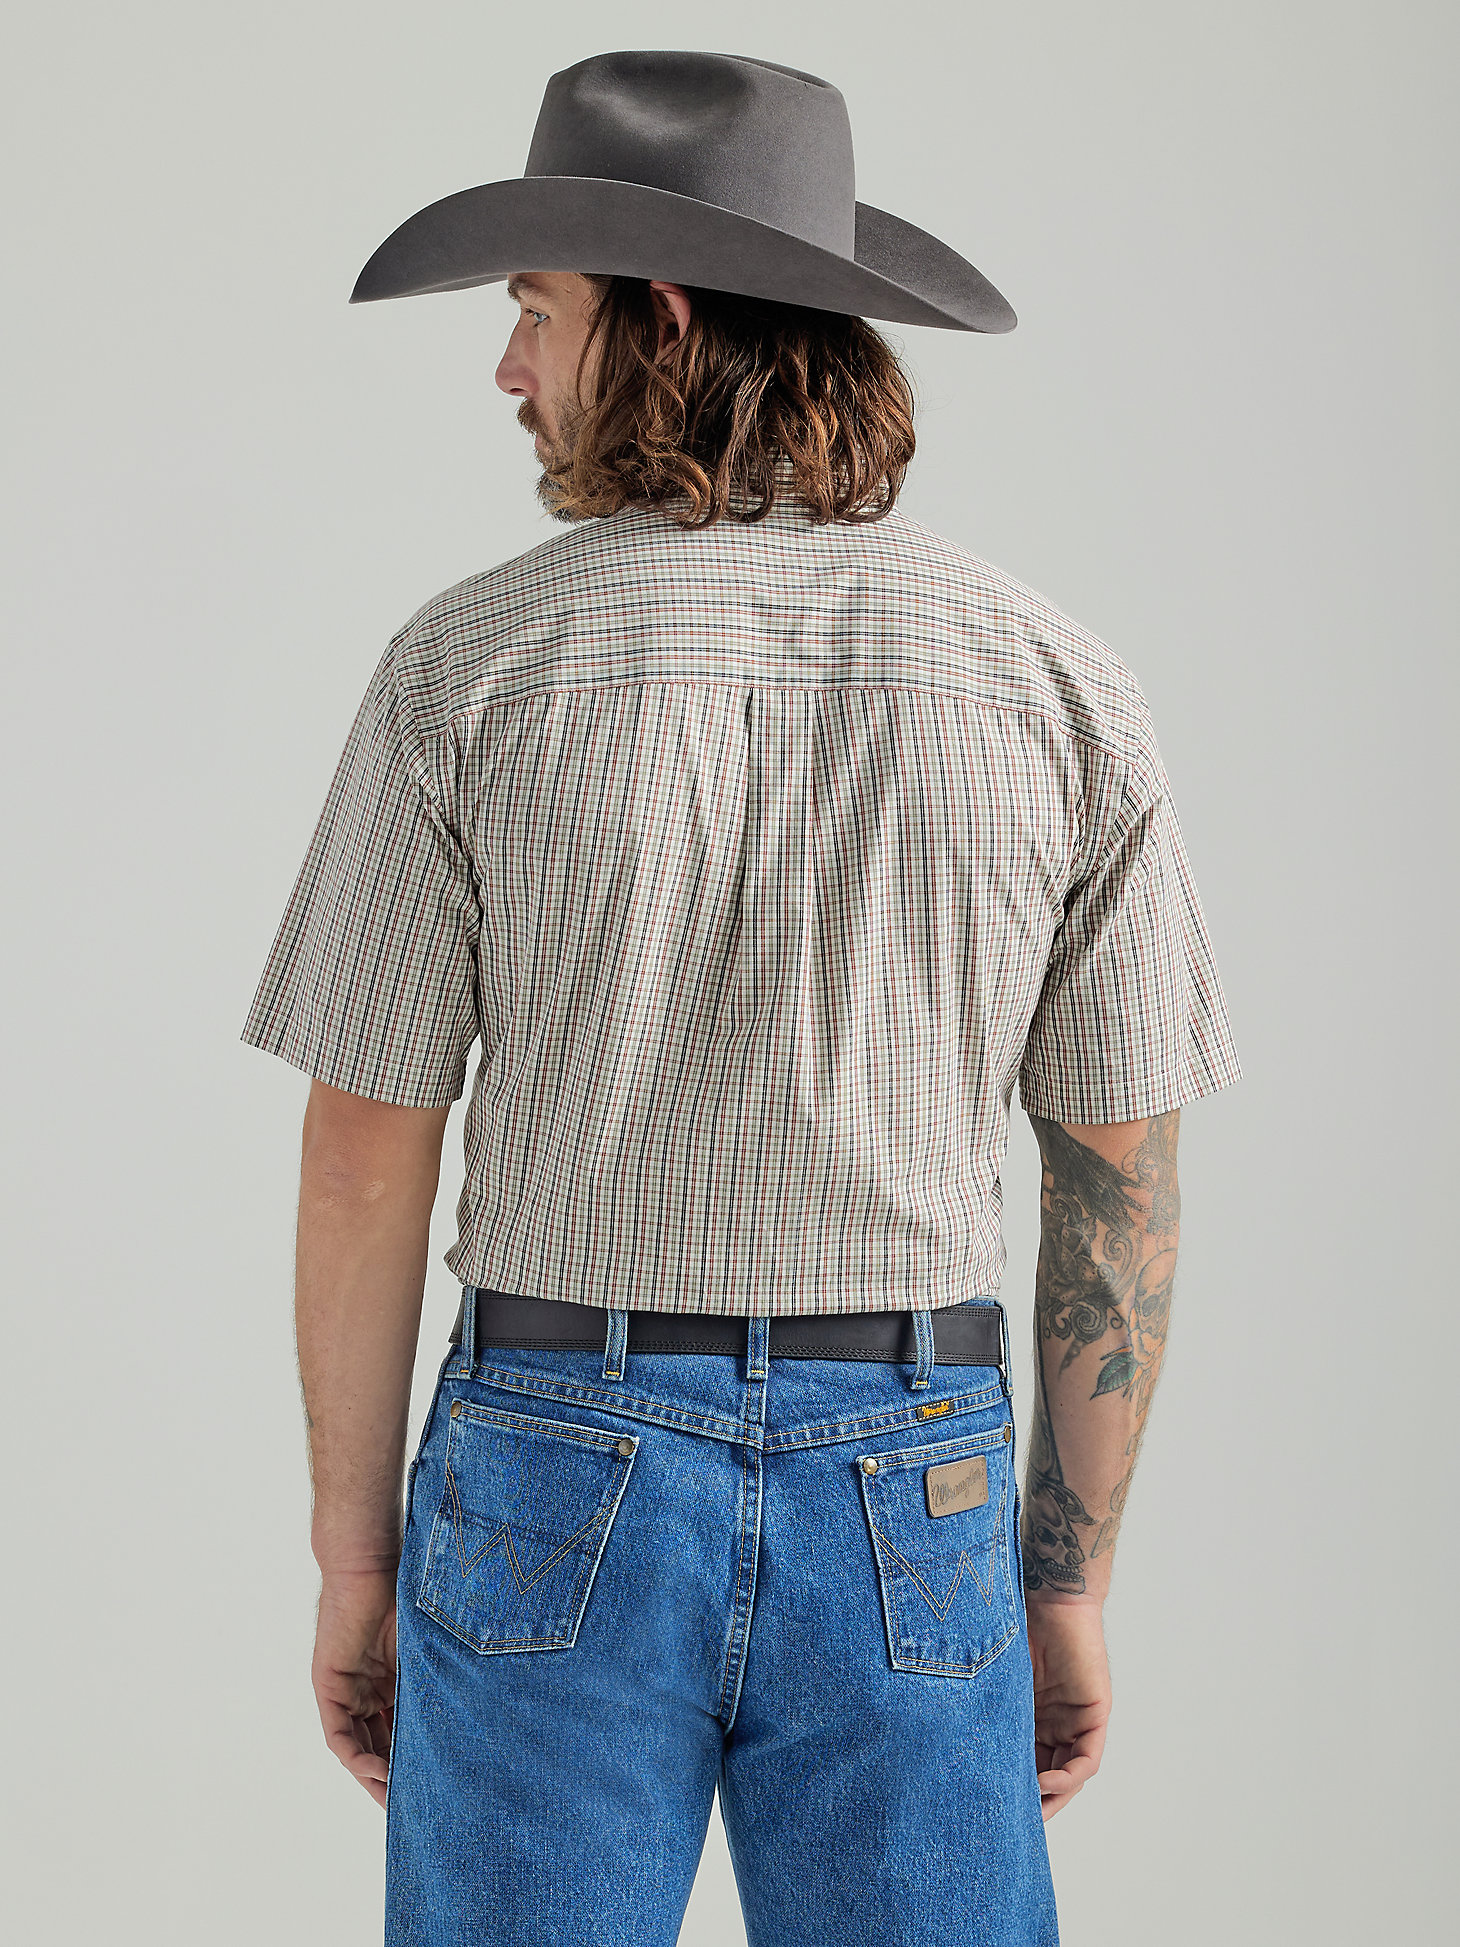 Men's George Strait Short Sleeve 1 Pocket Button Down Plaid Shirt